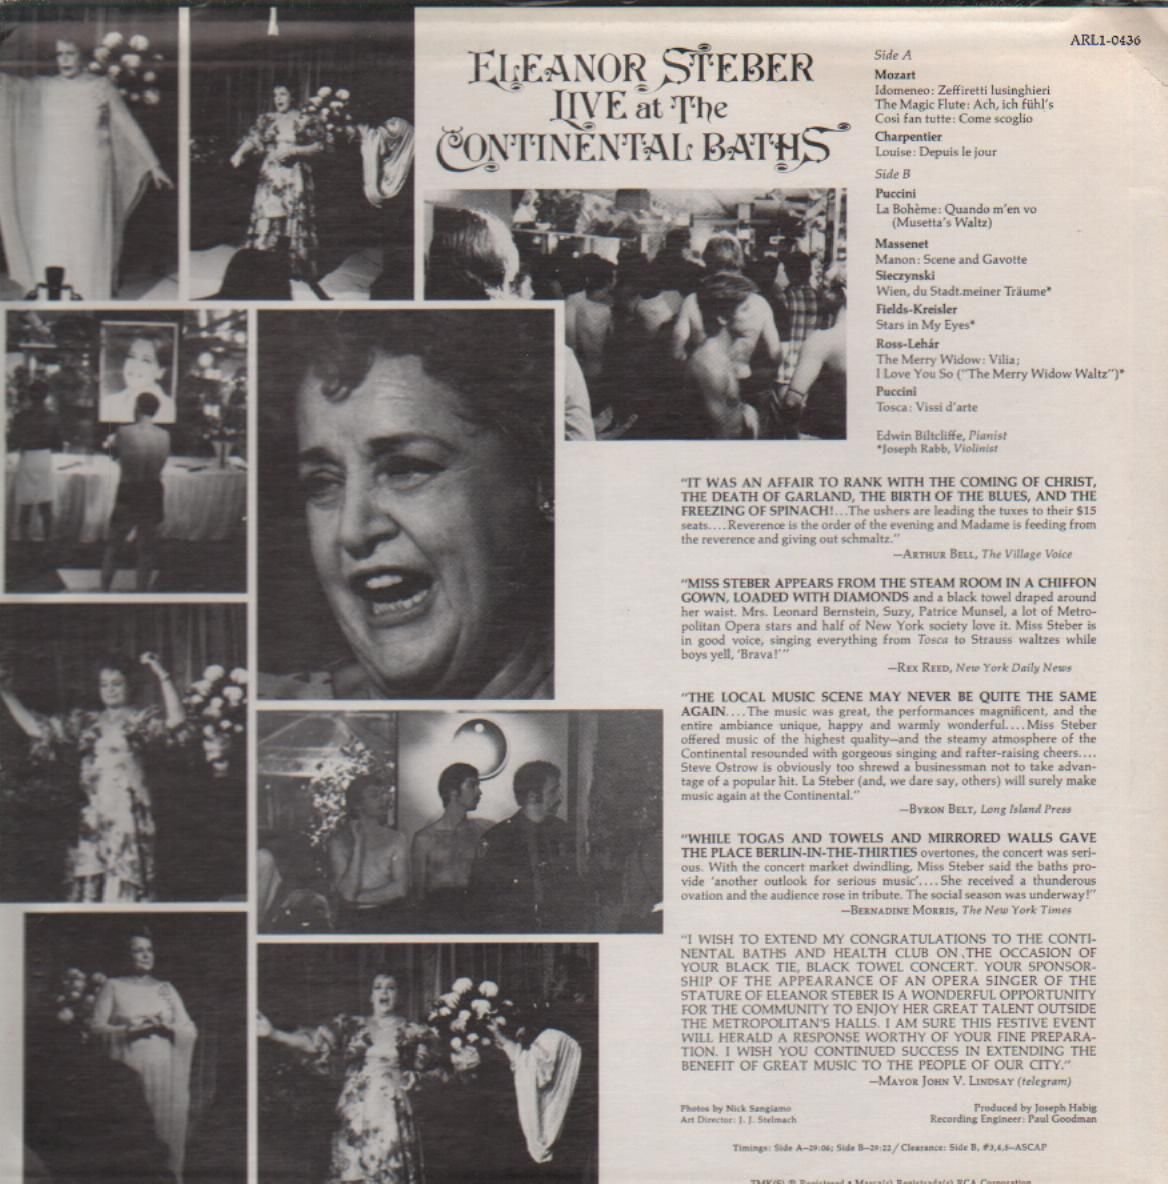 the continental baths opera diva Eleanor Steber, who recorded a live album there